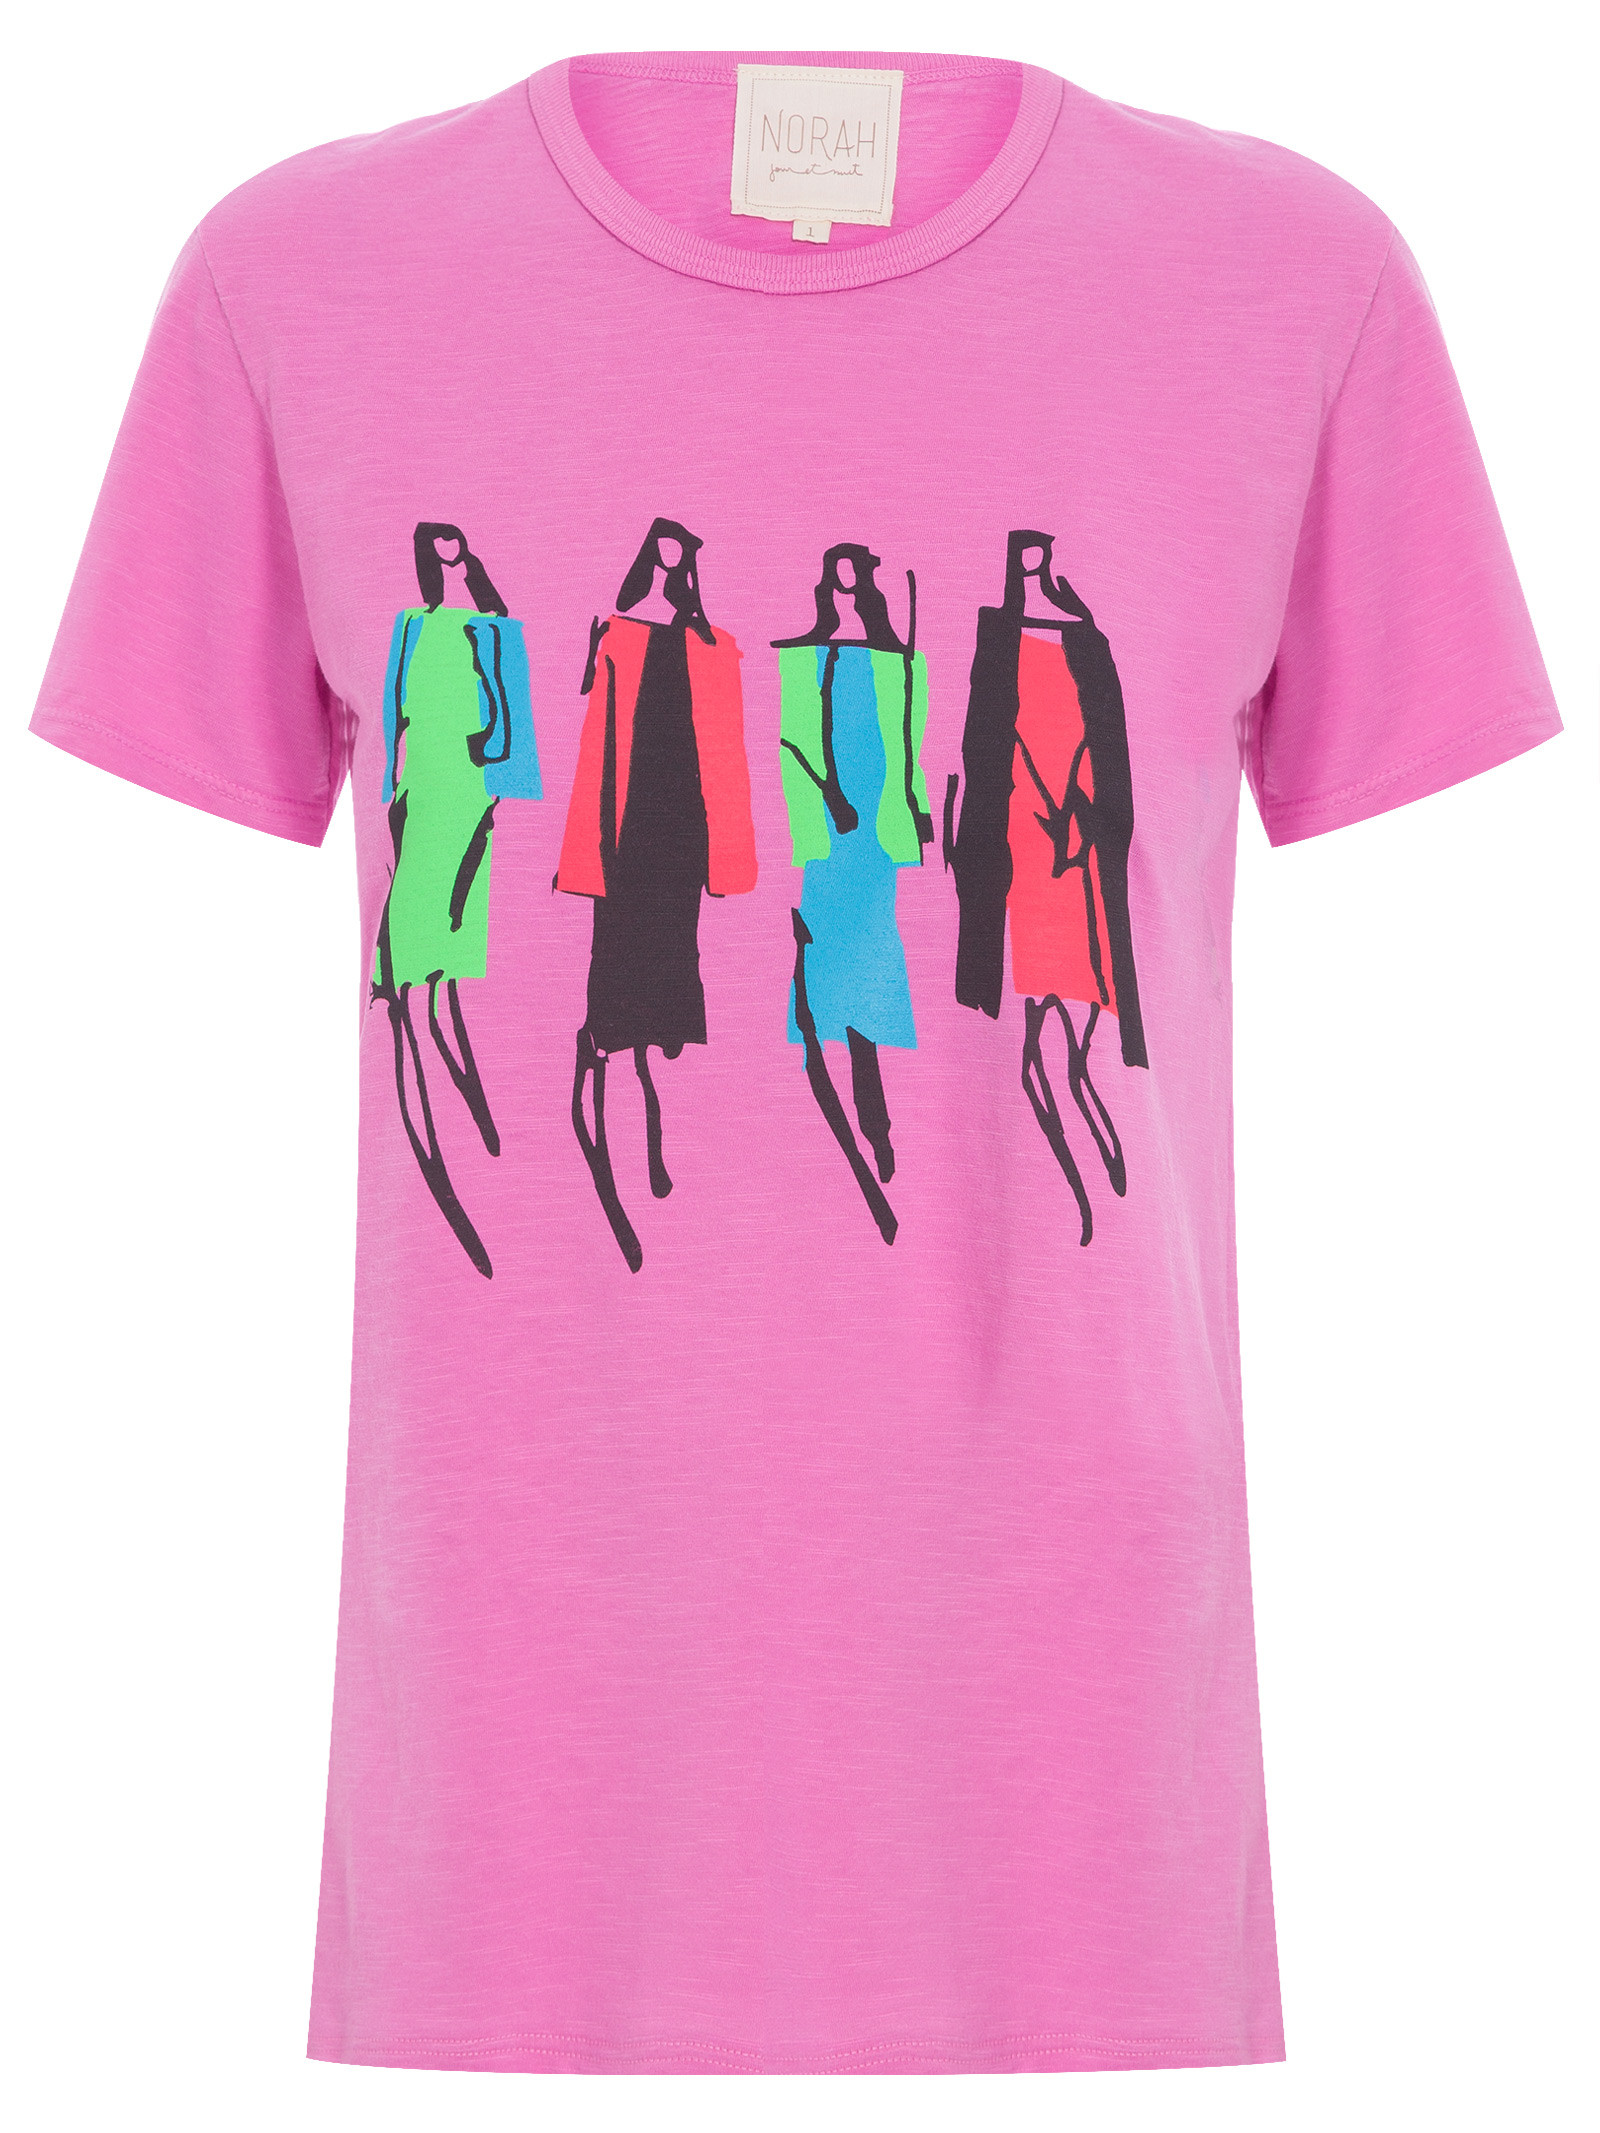 T-Shirt Feminina Neon Bonecas - Norah Jour Et Nuit - Rosa